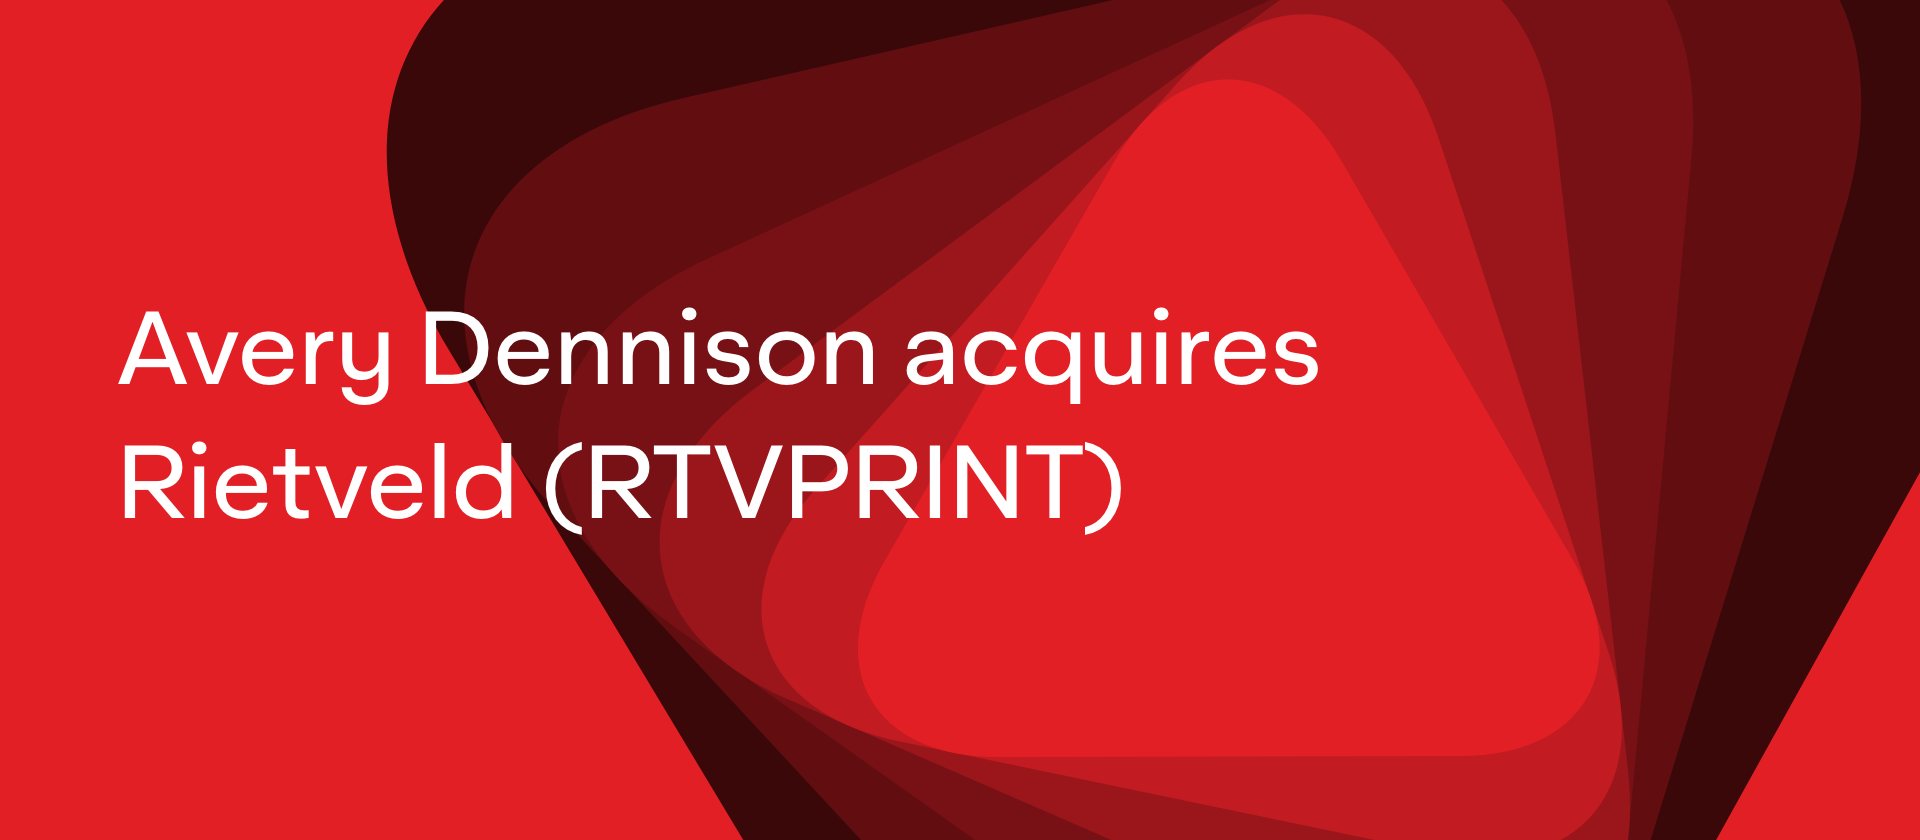 Avery Dennison acquires Rietveld (RTVPRINT)